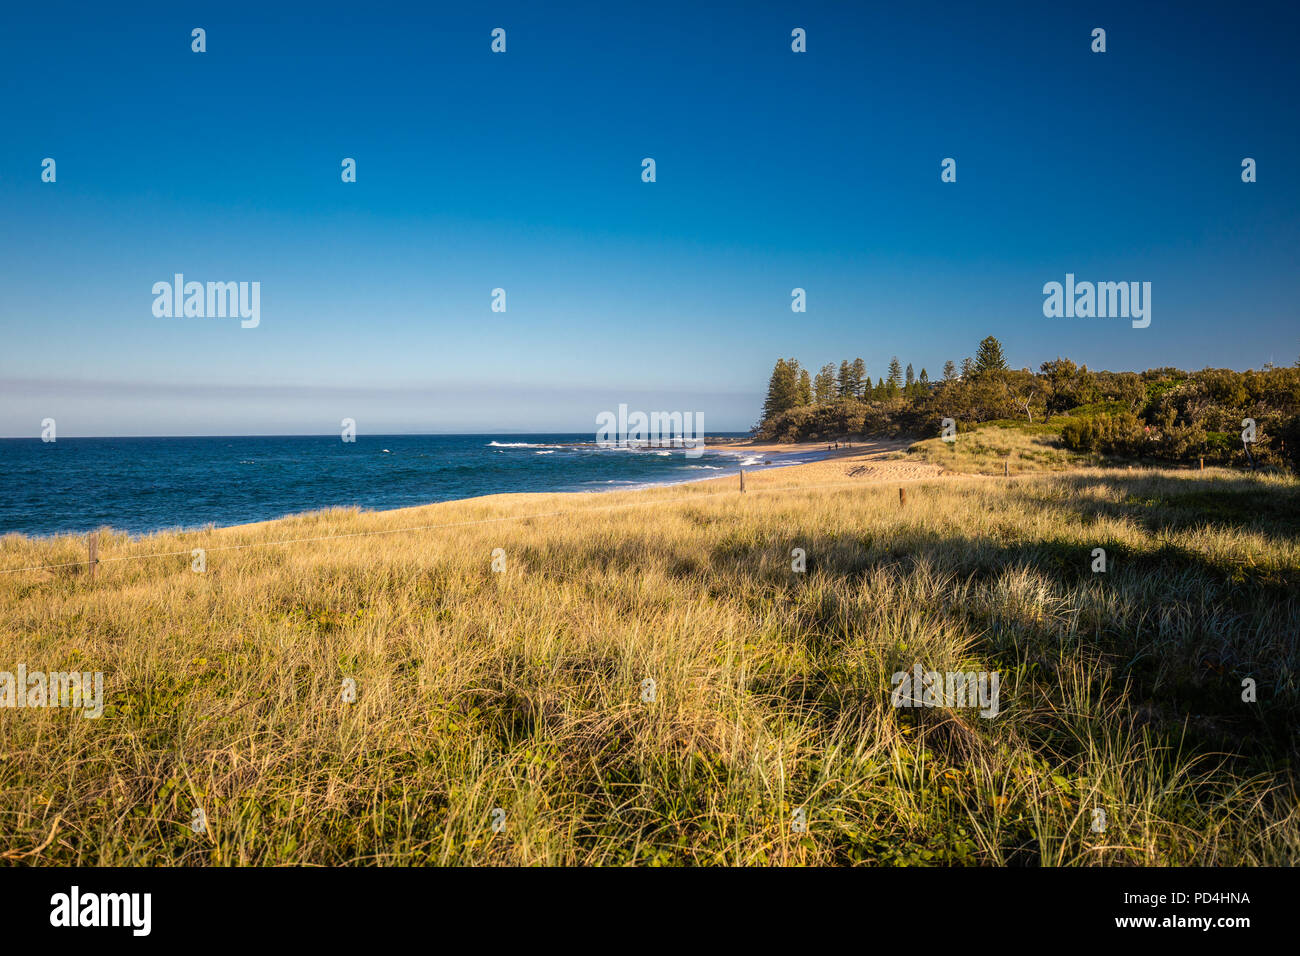 Sunset view of Shelly Beach at Caloundra, Sunshine Coast, Queensland, Australia Stock Photo